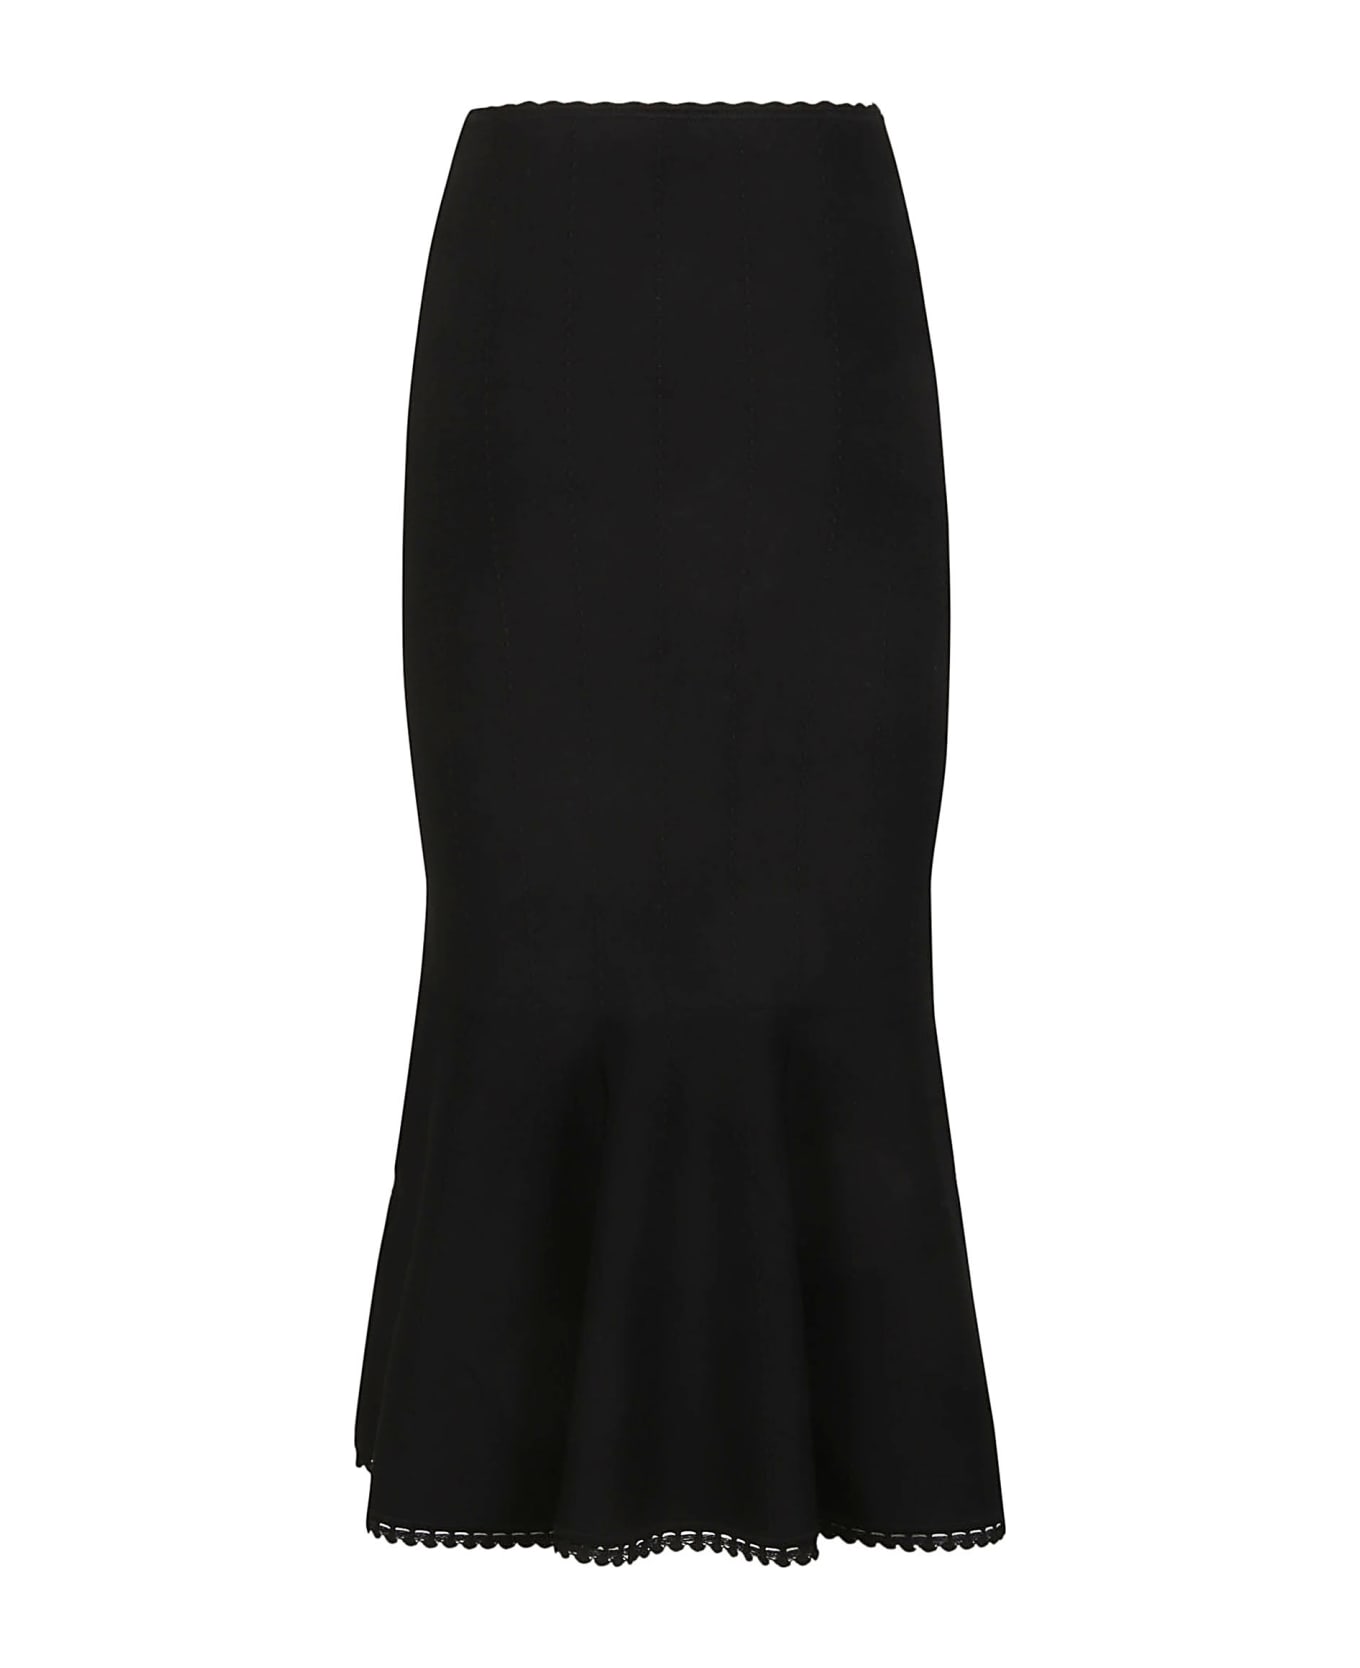 Victoria Beckham Scallop Trim Flared Skirt - Black スカート